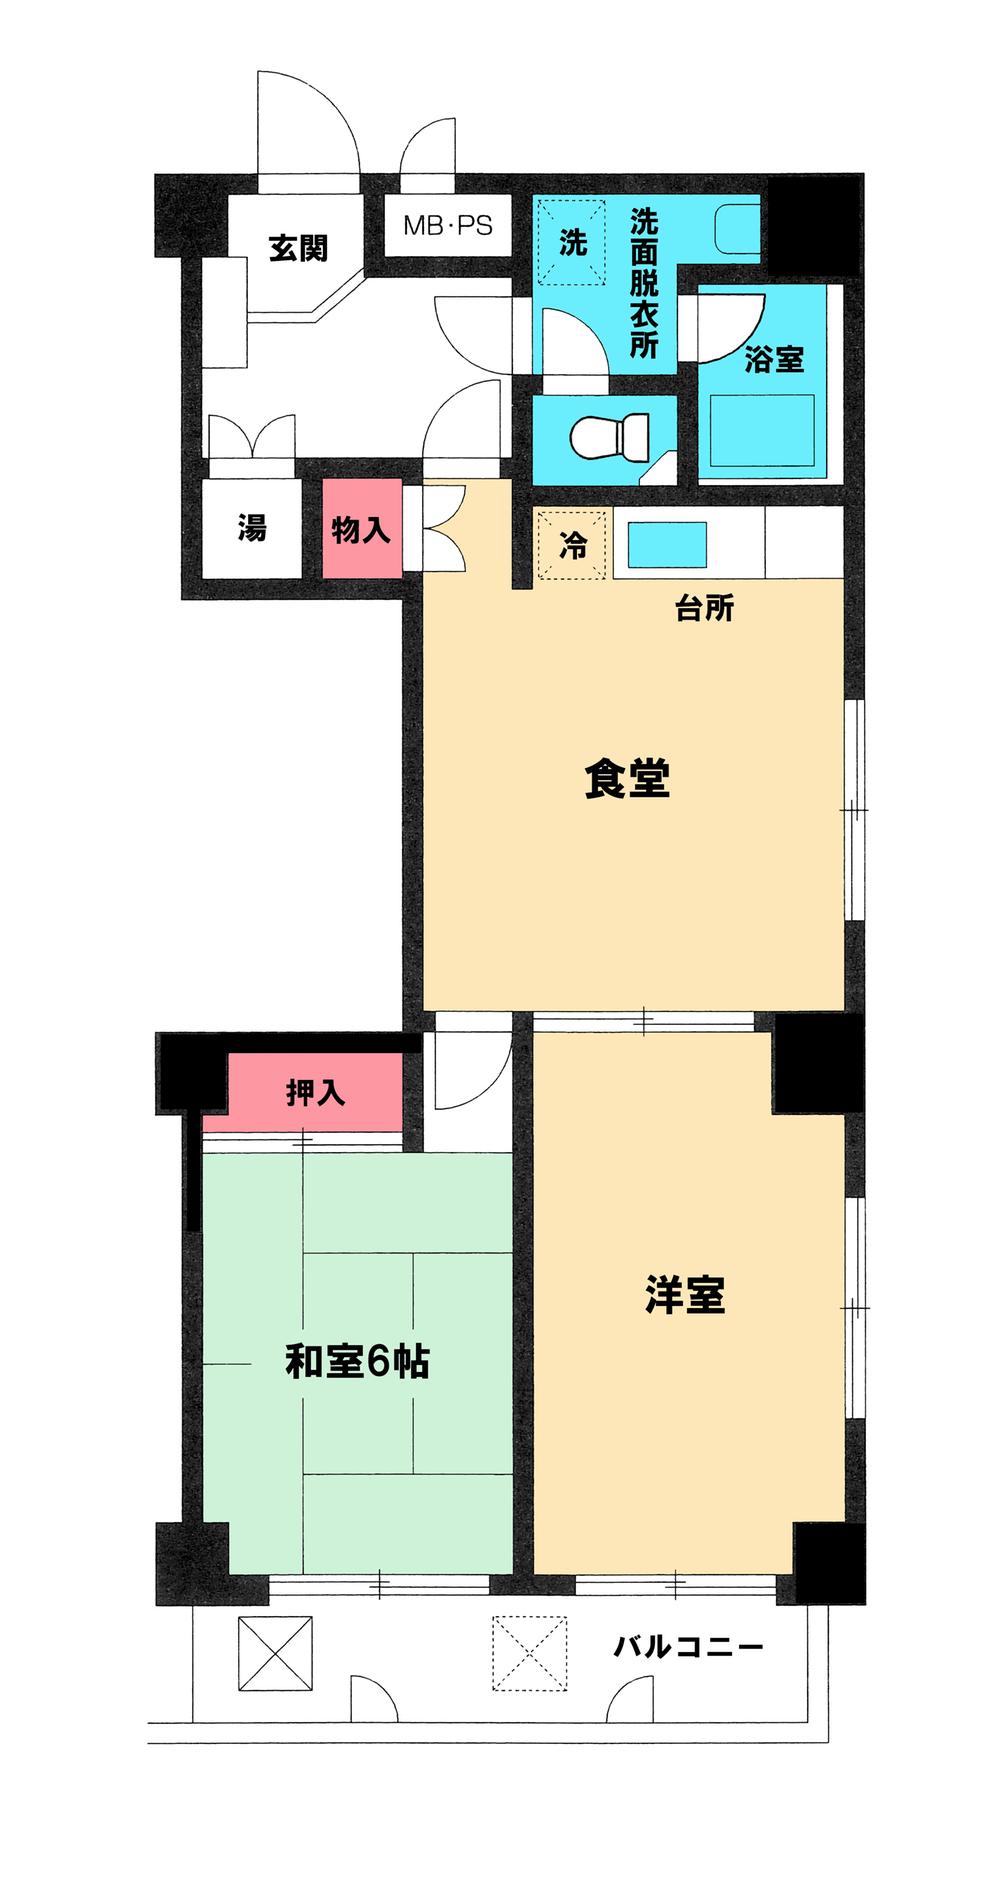 Floor plan. 2DK, Price 11.2 million yen, Occupied area 55.62 sq m , Balcony area 6.09 sq m